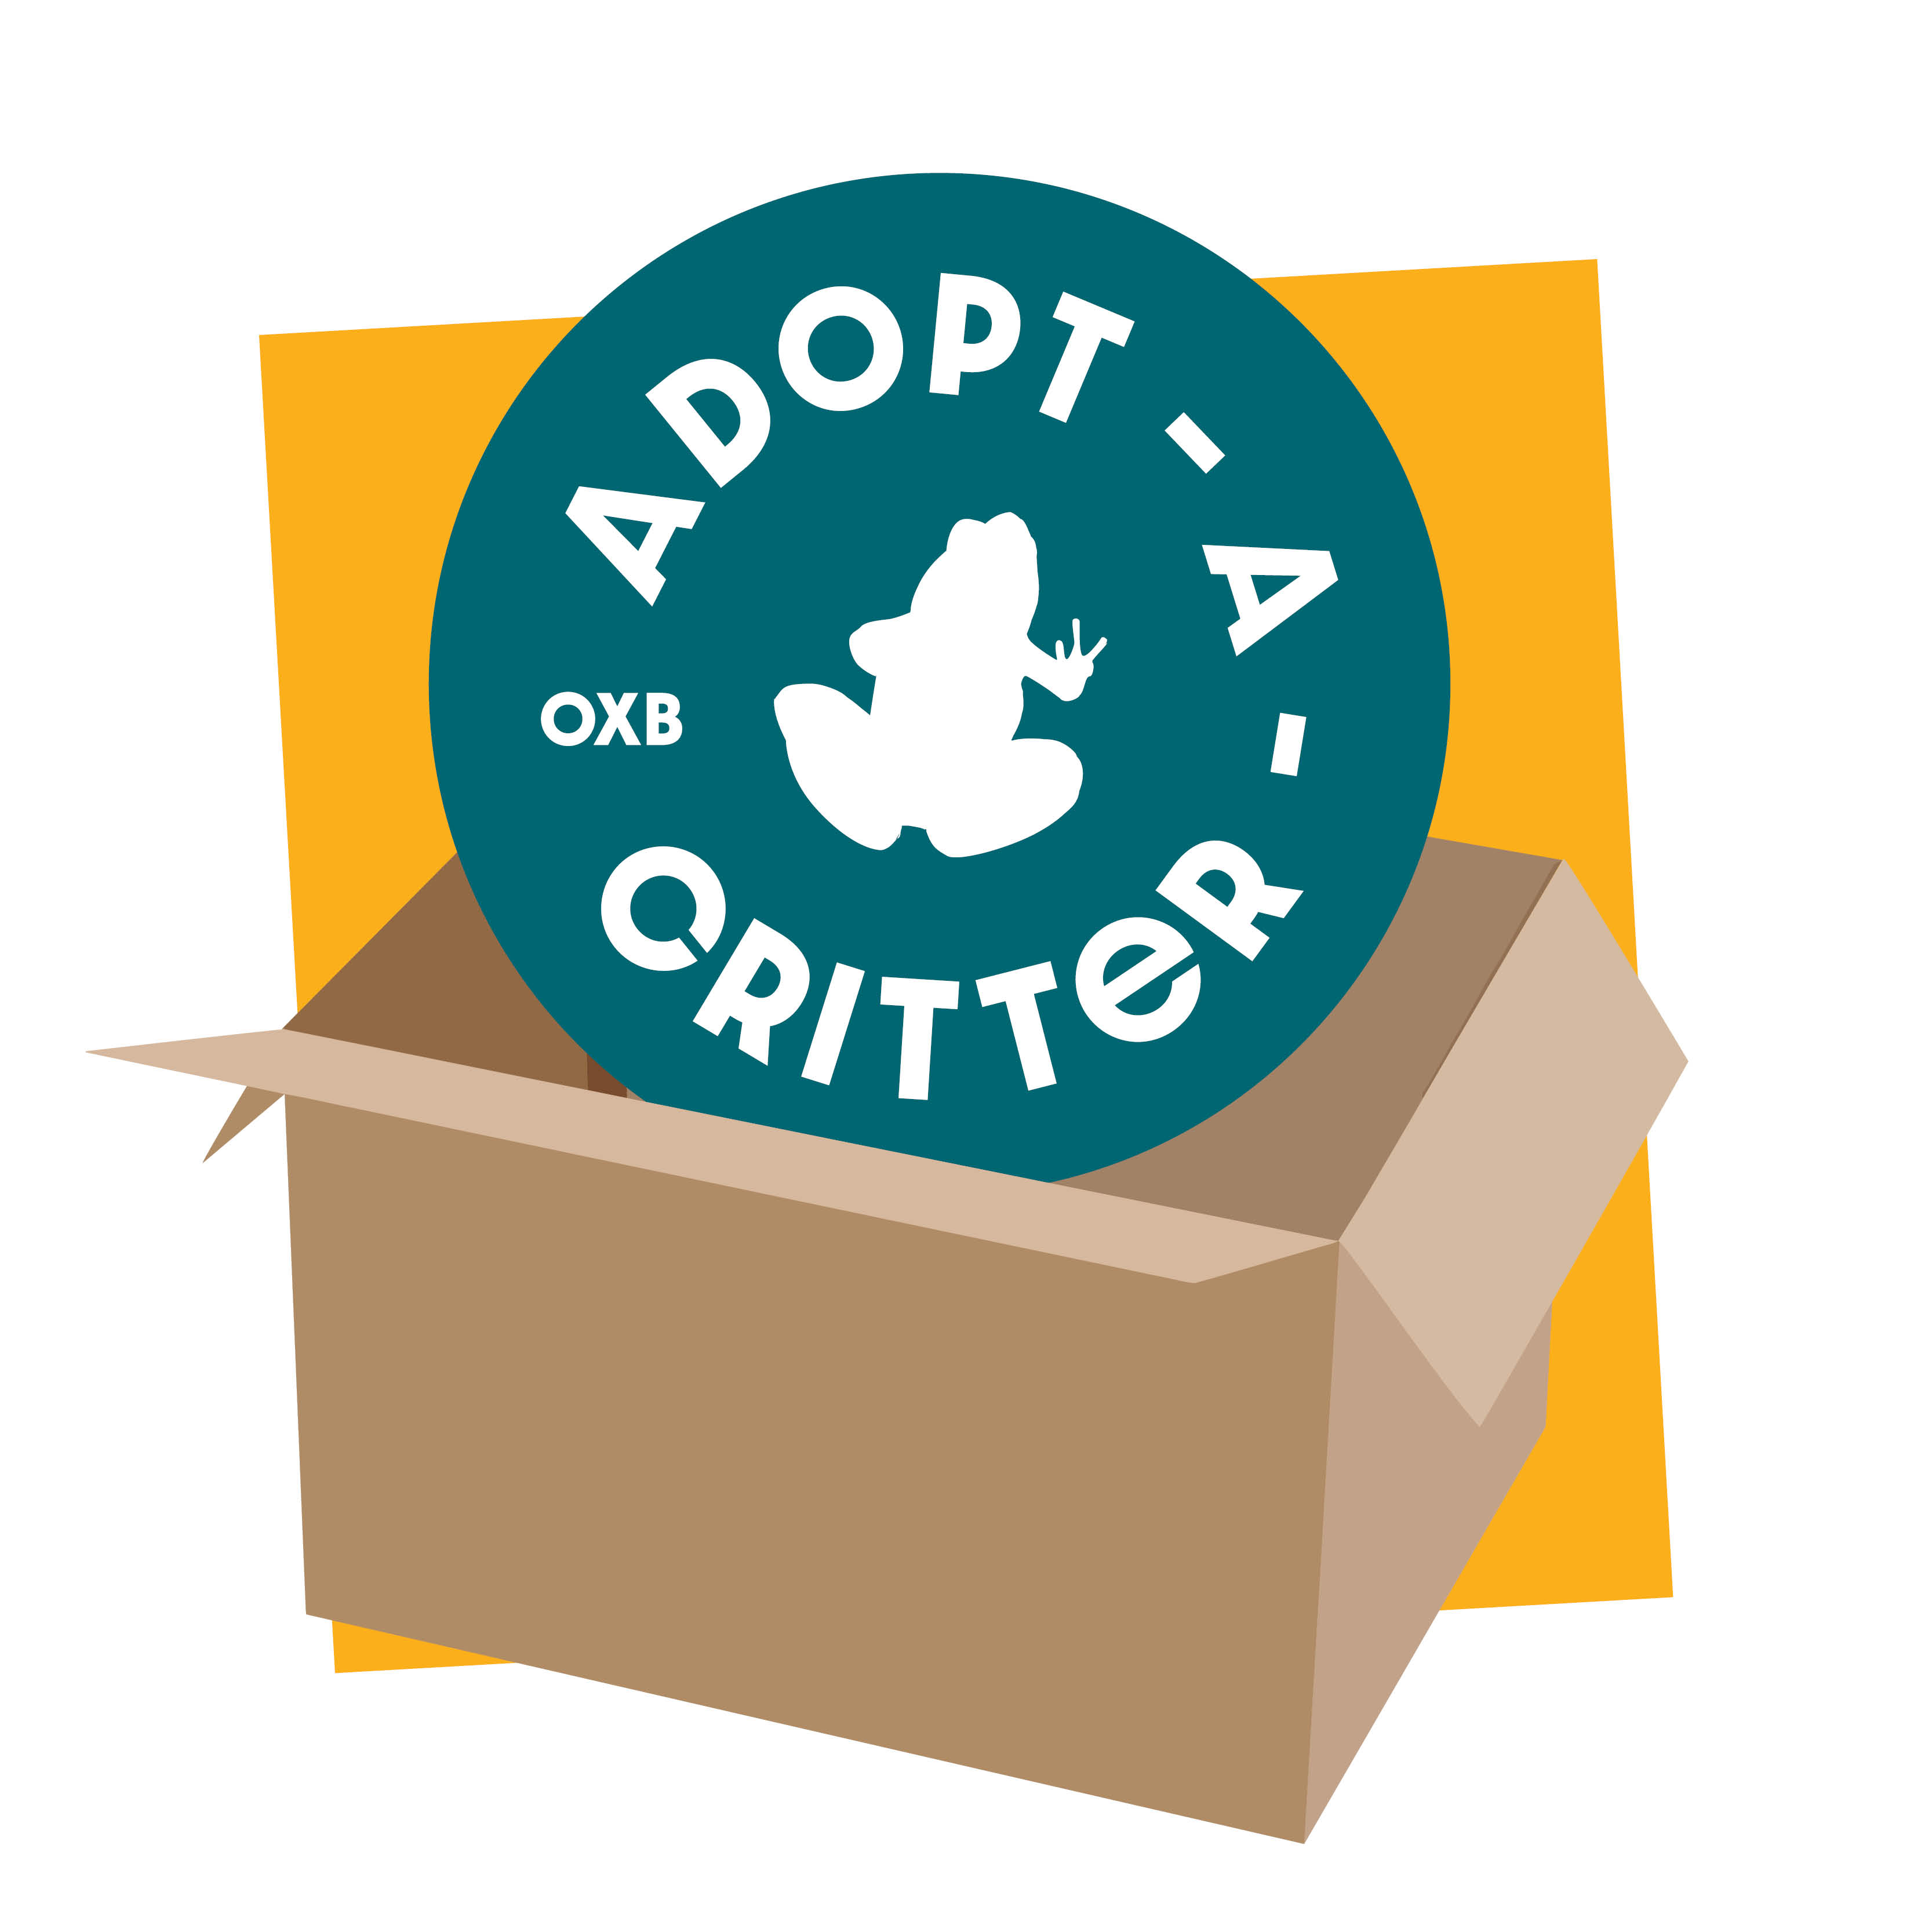 Adopt-A-Critter logo in a cardboard box